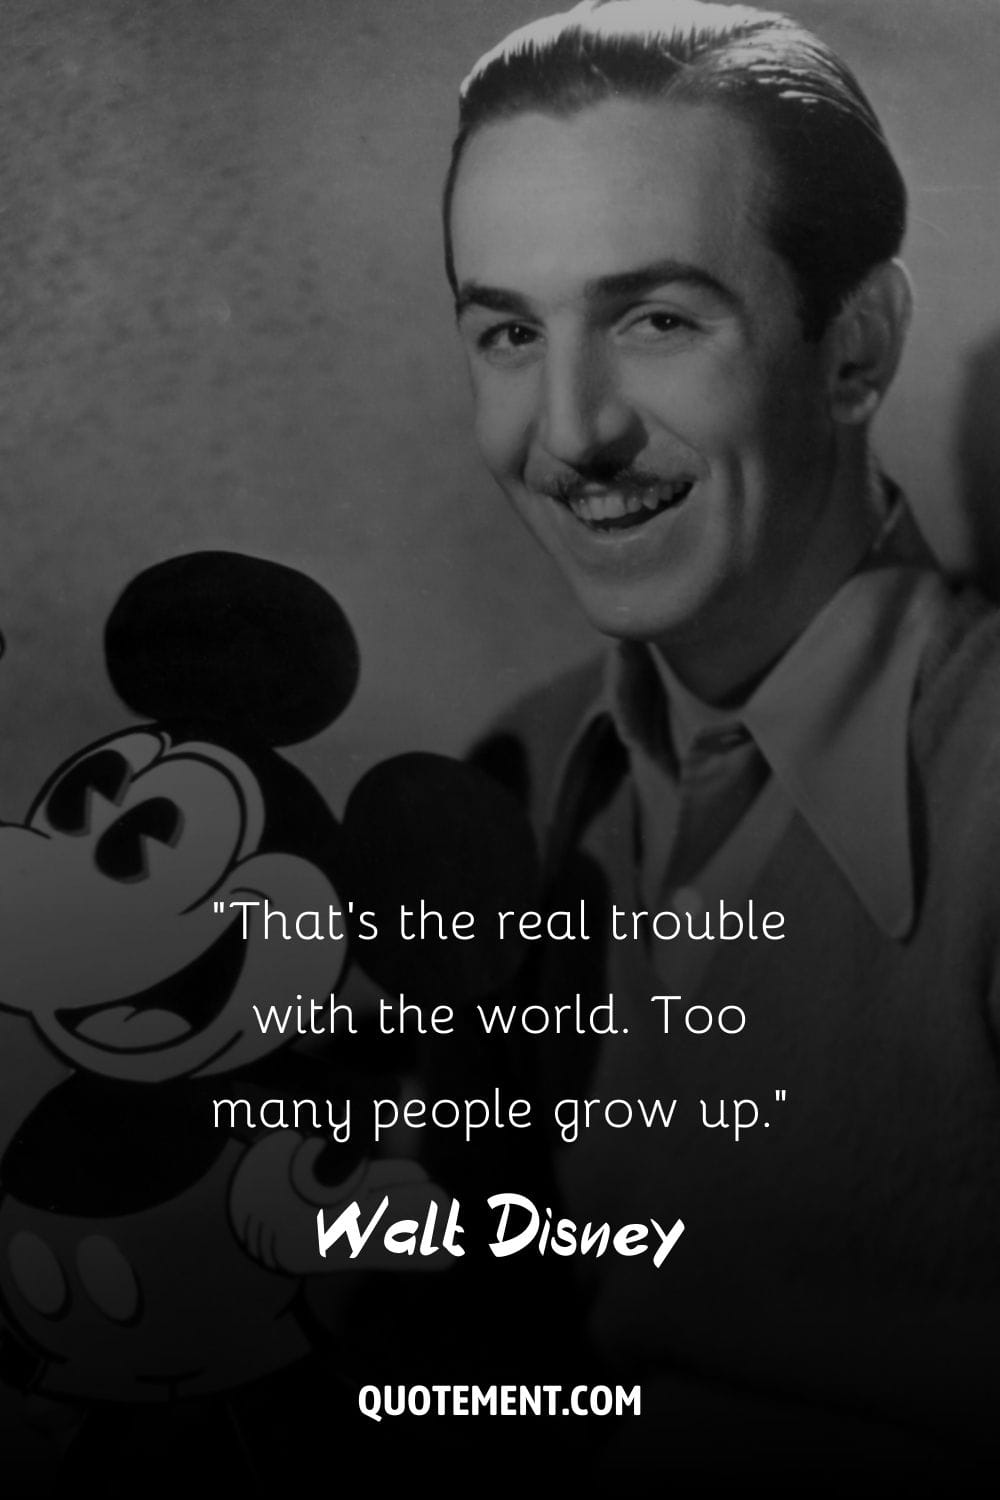 Image of Walt Disney representing the most iconic Walt Disney quote.